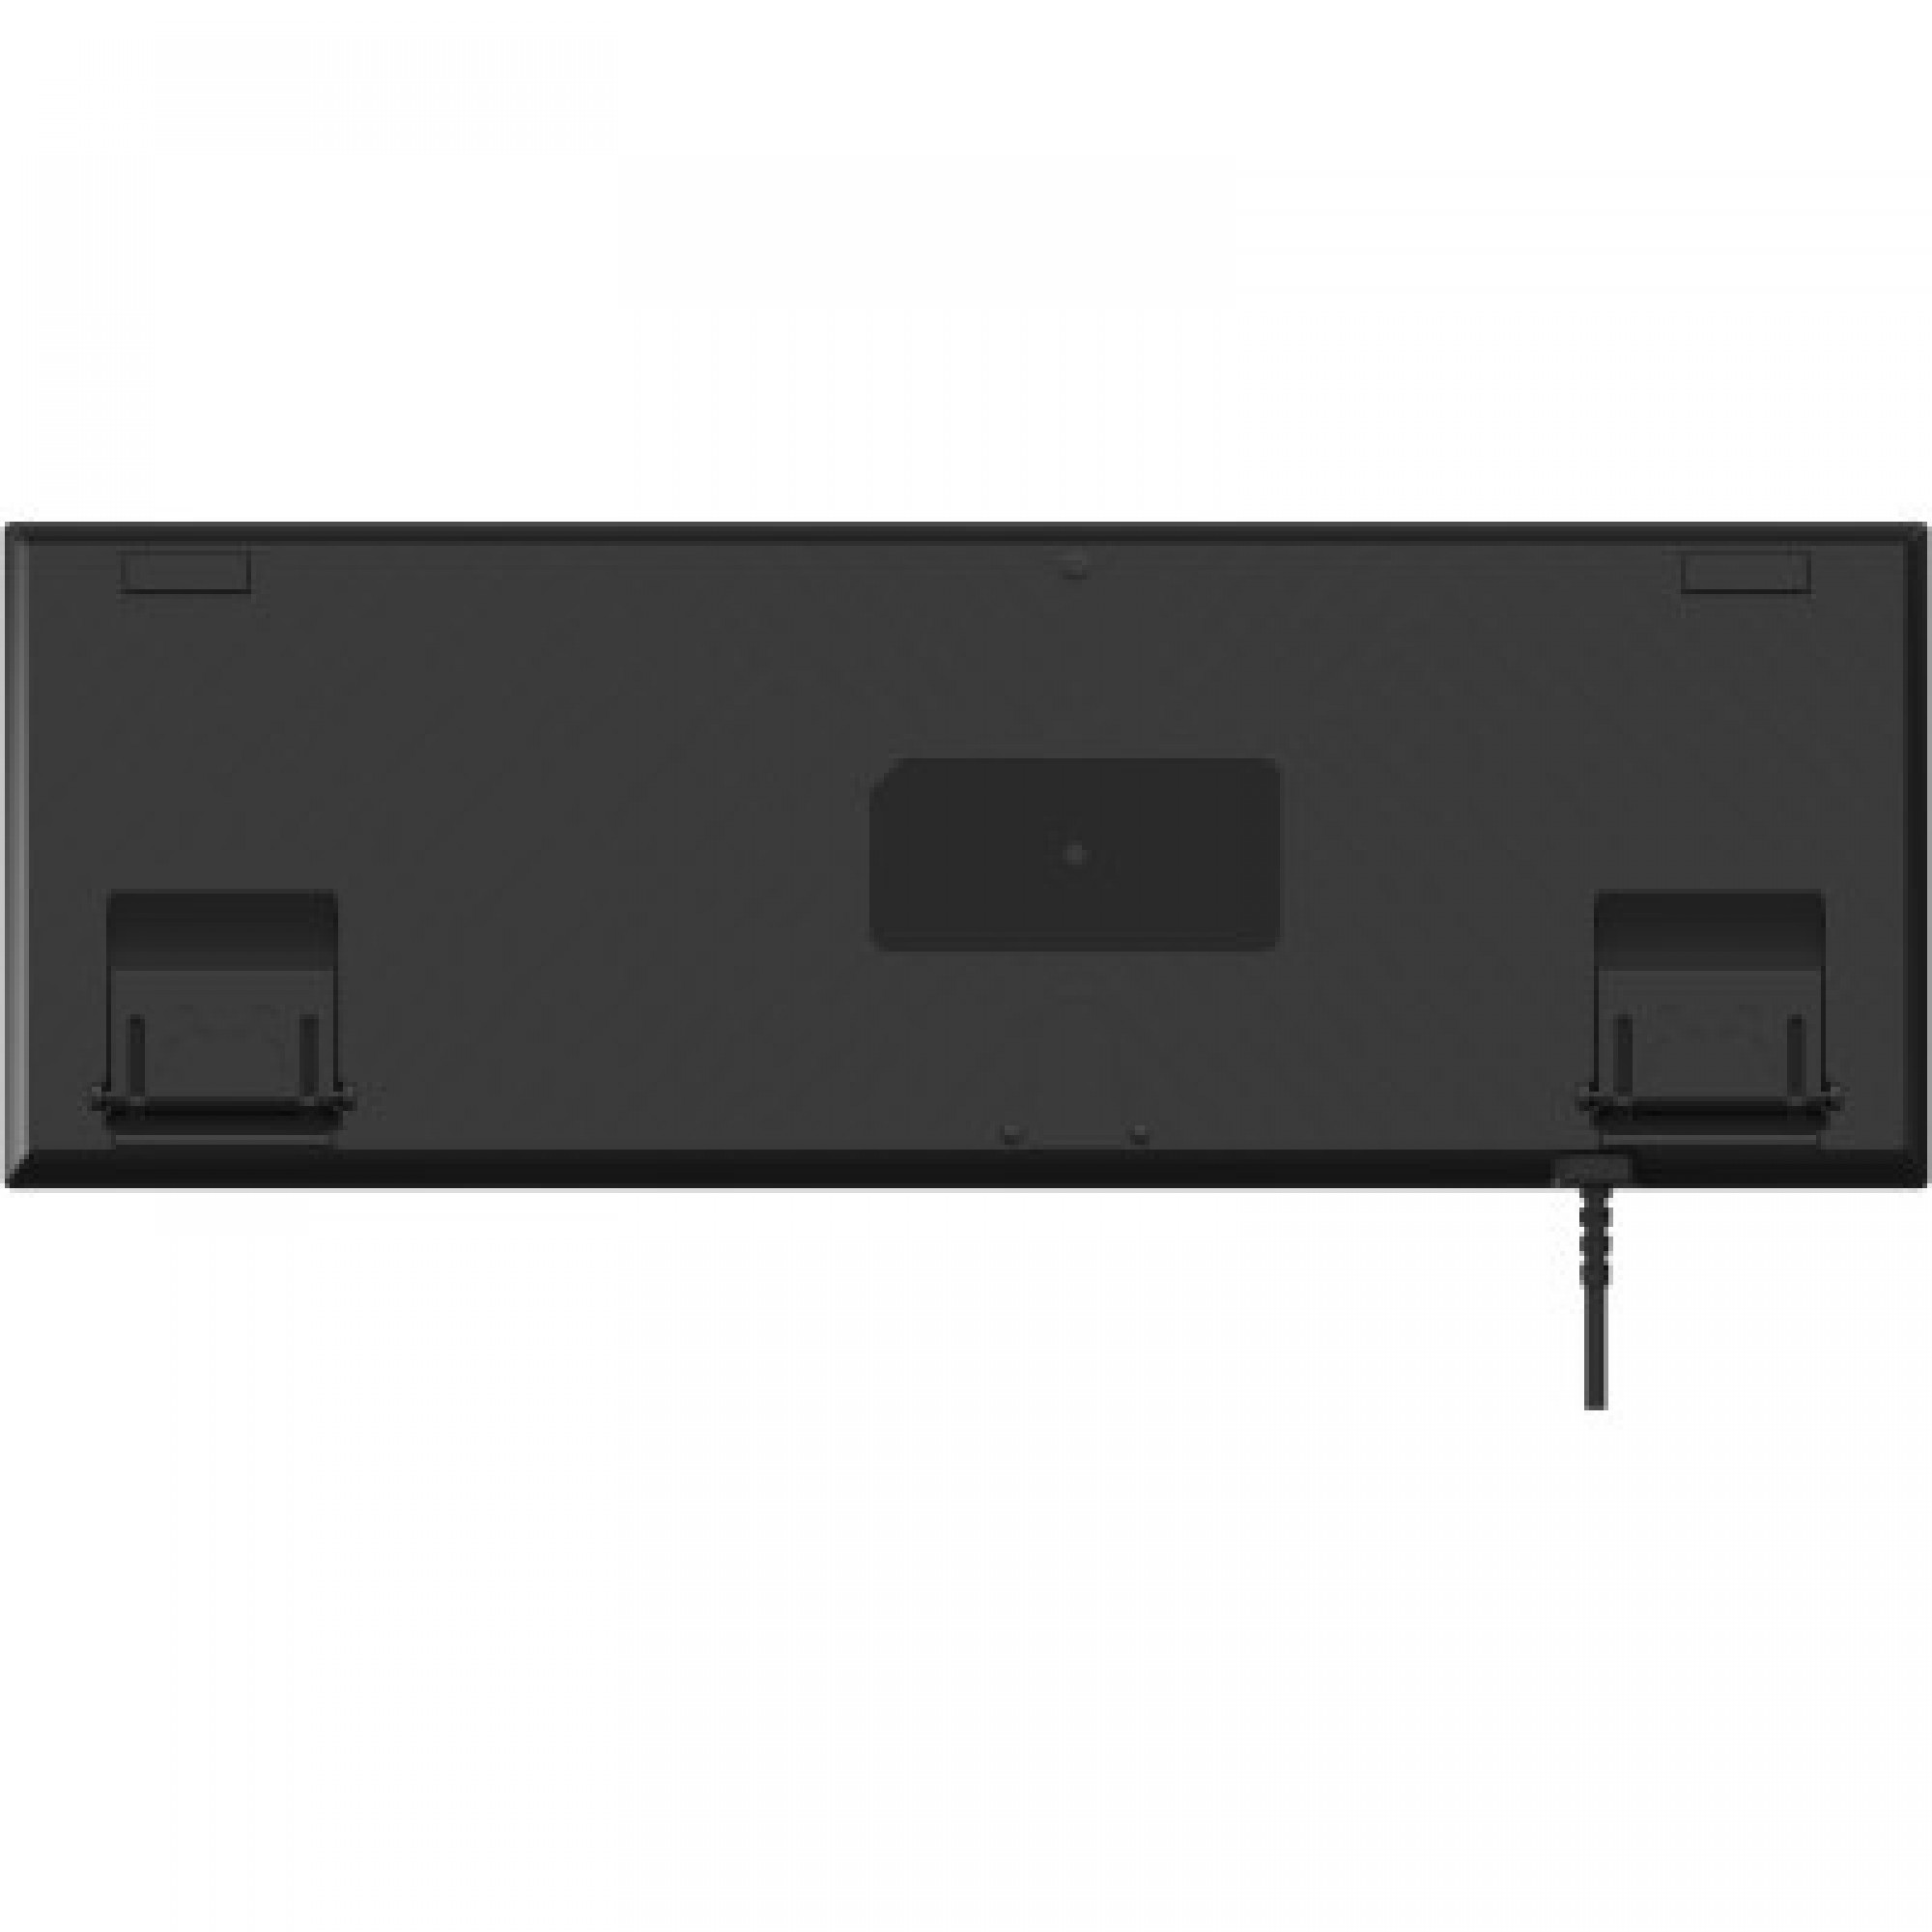 Клавіатура GamePro MK100R Red Switch LED USB Black/Grey (MK100R)